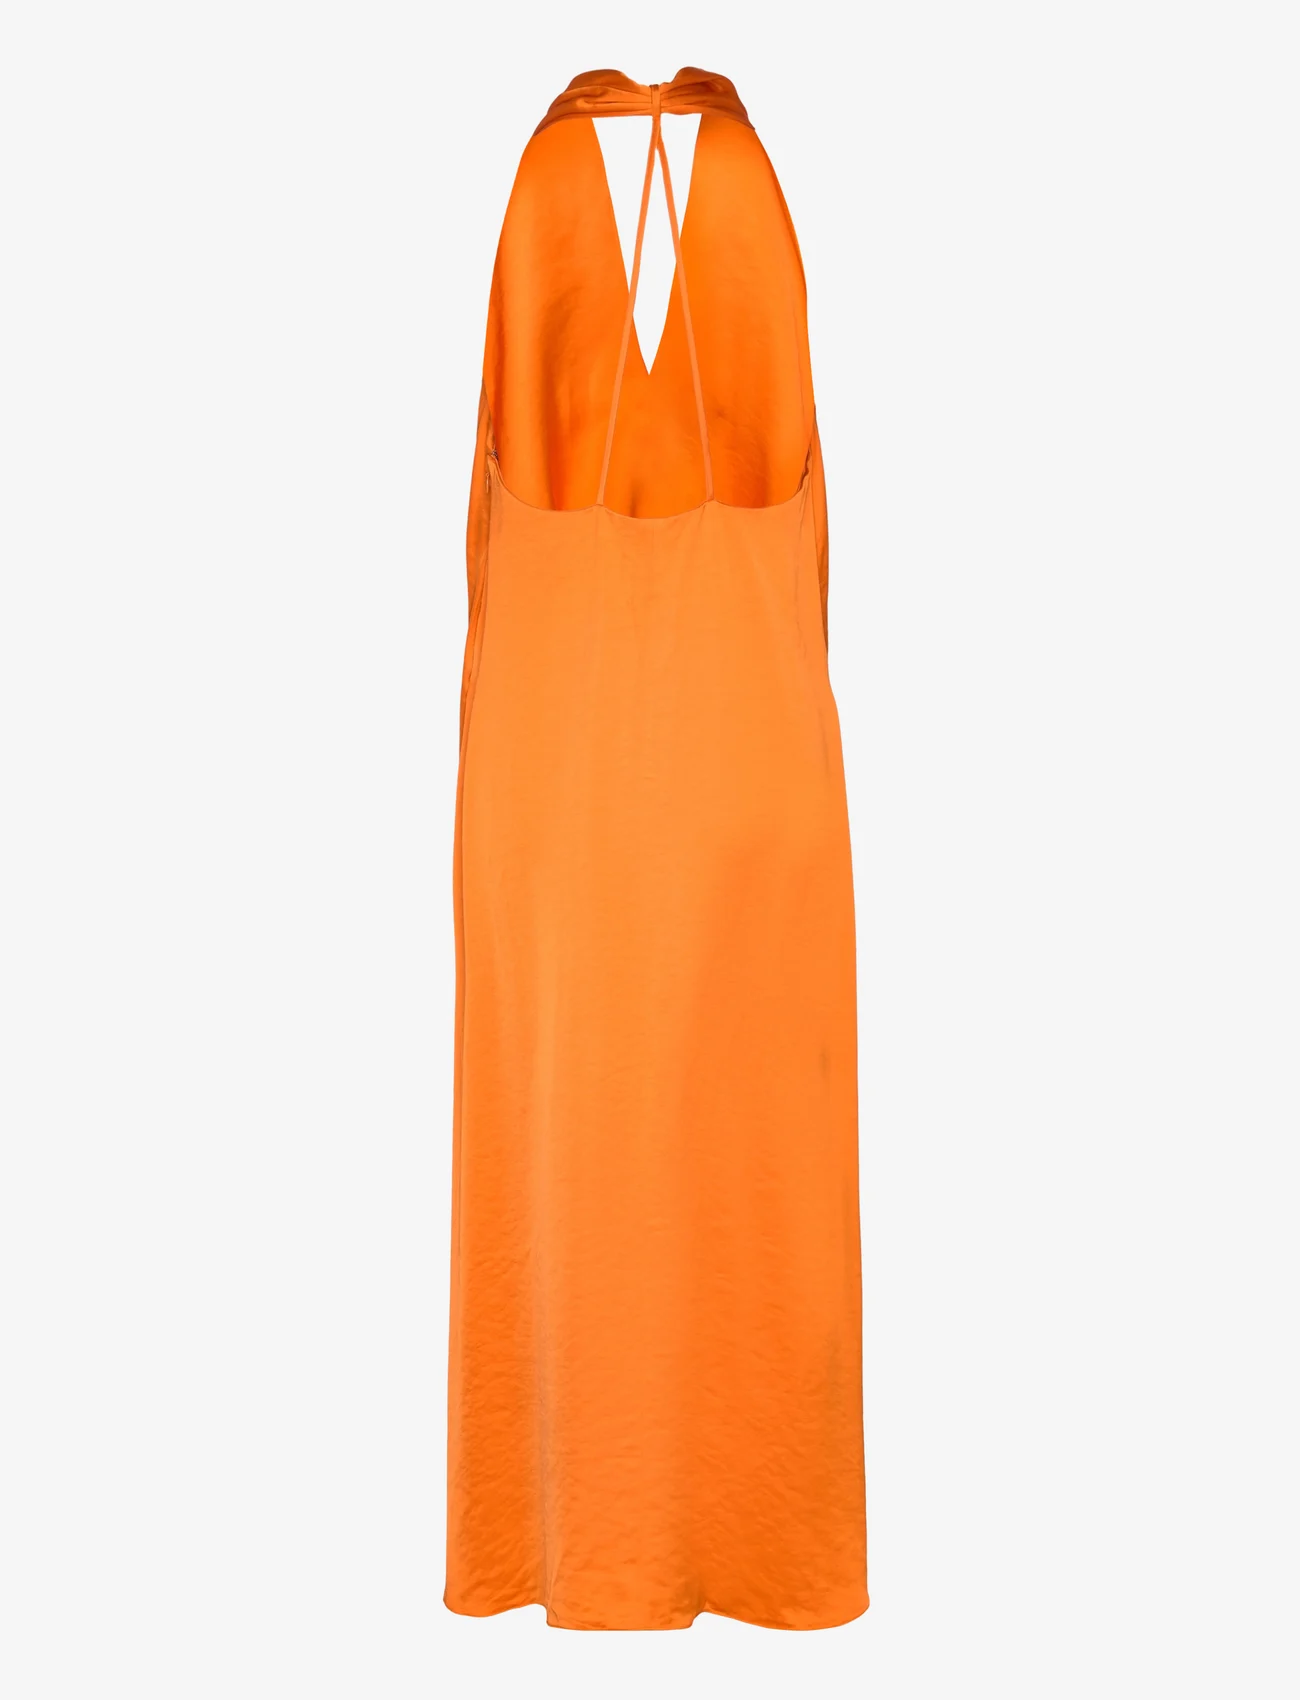 Samsøe Samsøe - Cille dress 14773 - midiklänningar - russet orange - 1